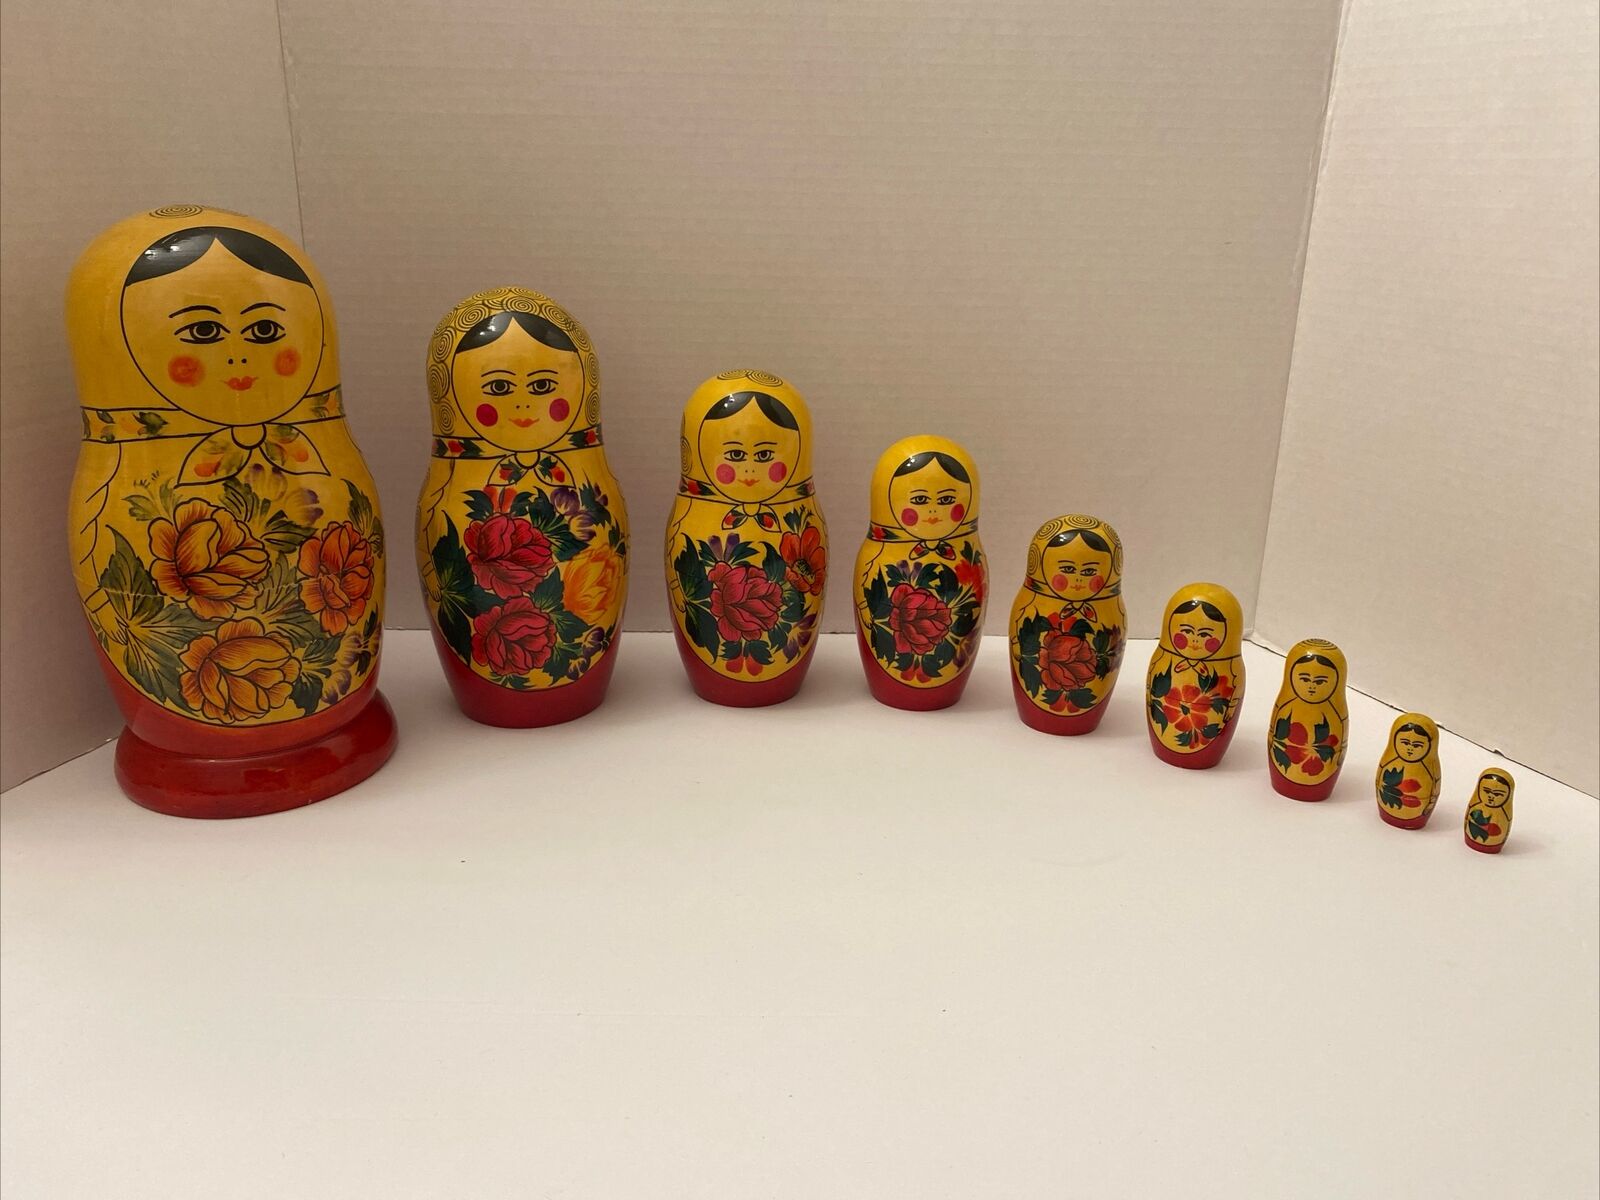 9 Piece Matryoshka 12" Russian Traditional Nesting Dolls Made in Russia